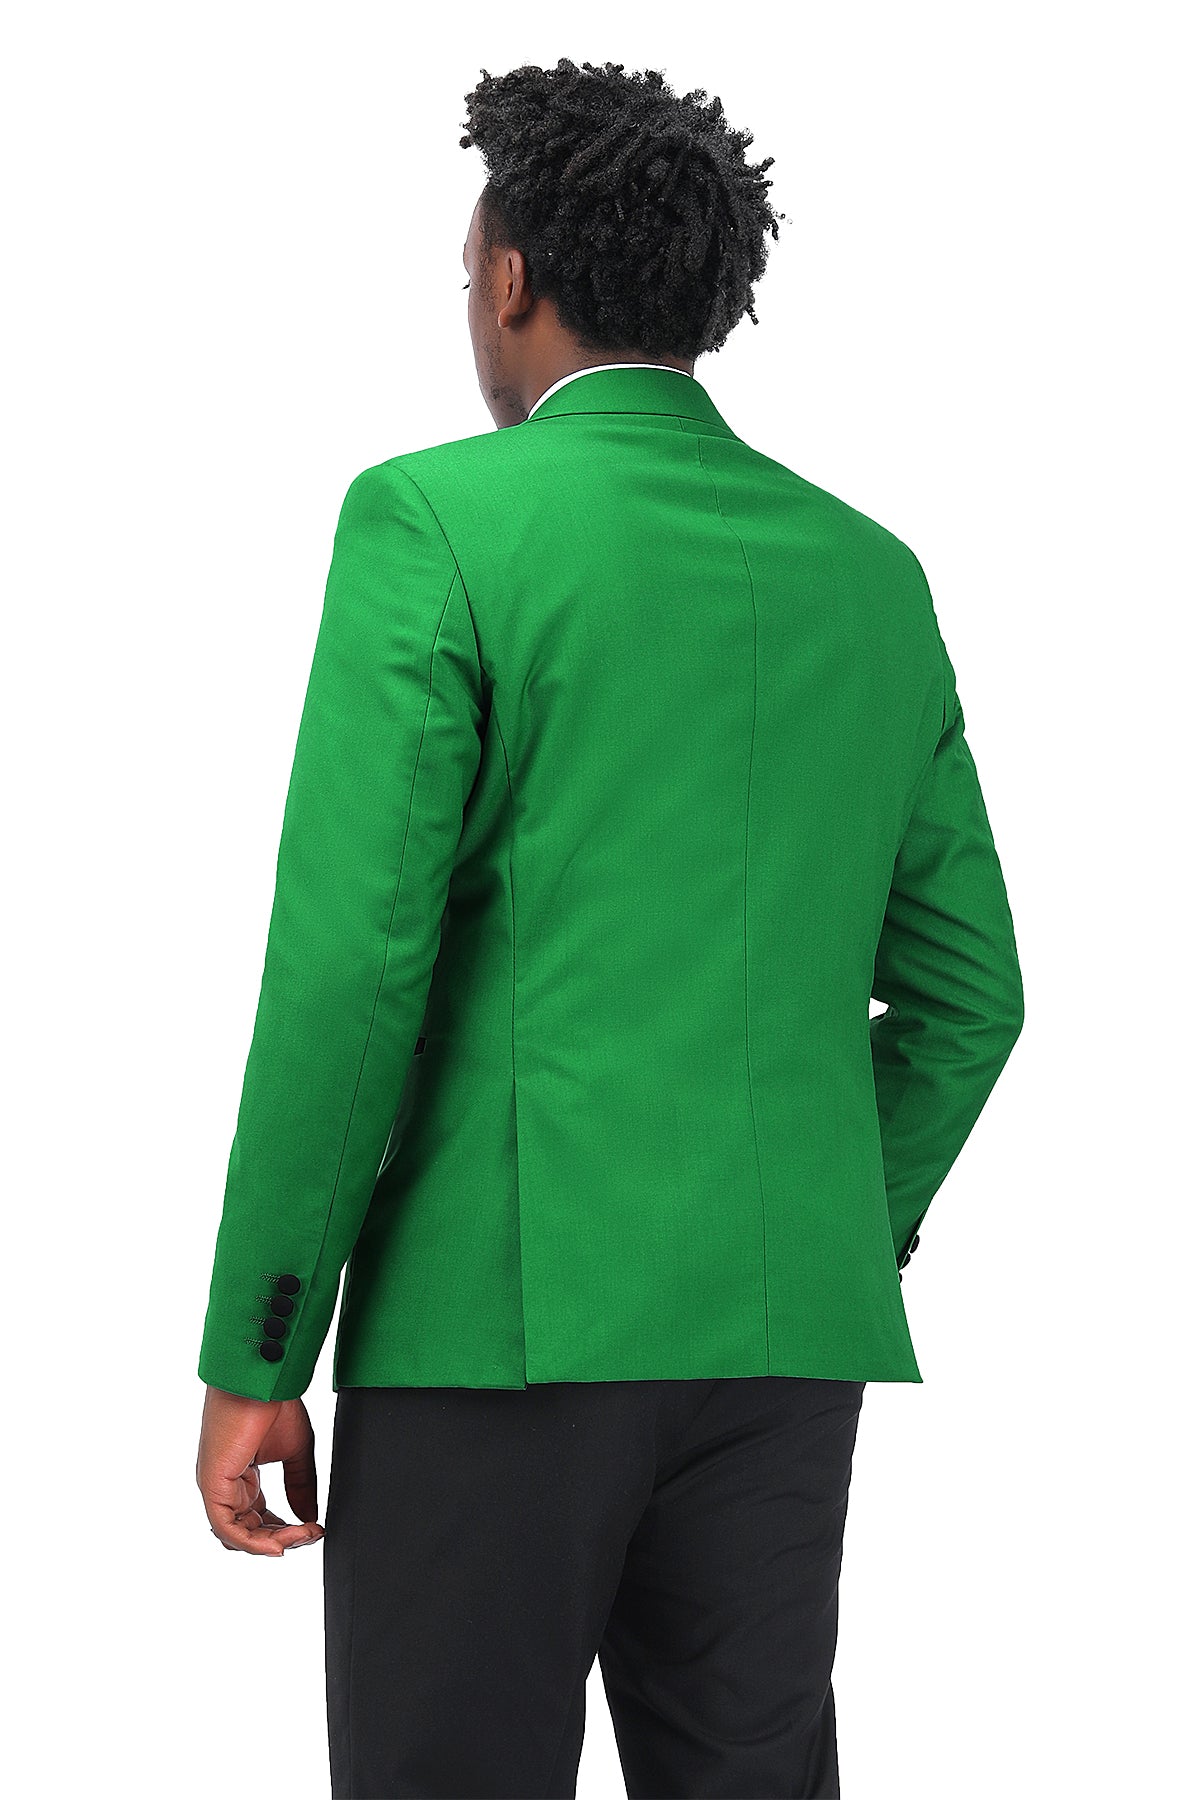 3 Piece Men's Suits One Button Slim Fit Peaked Lapel Tuxedo Green